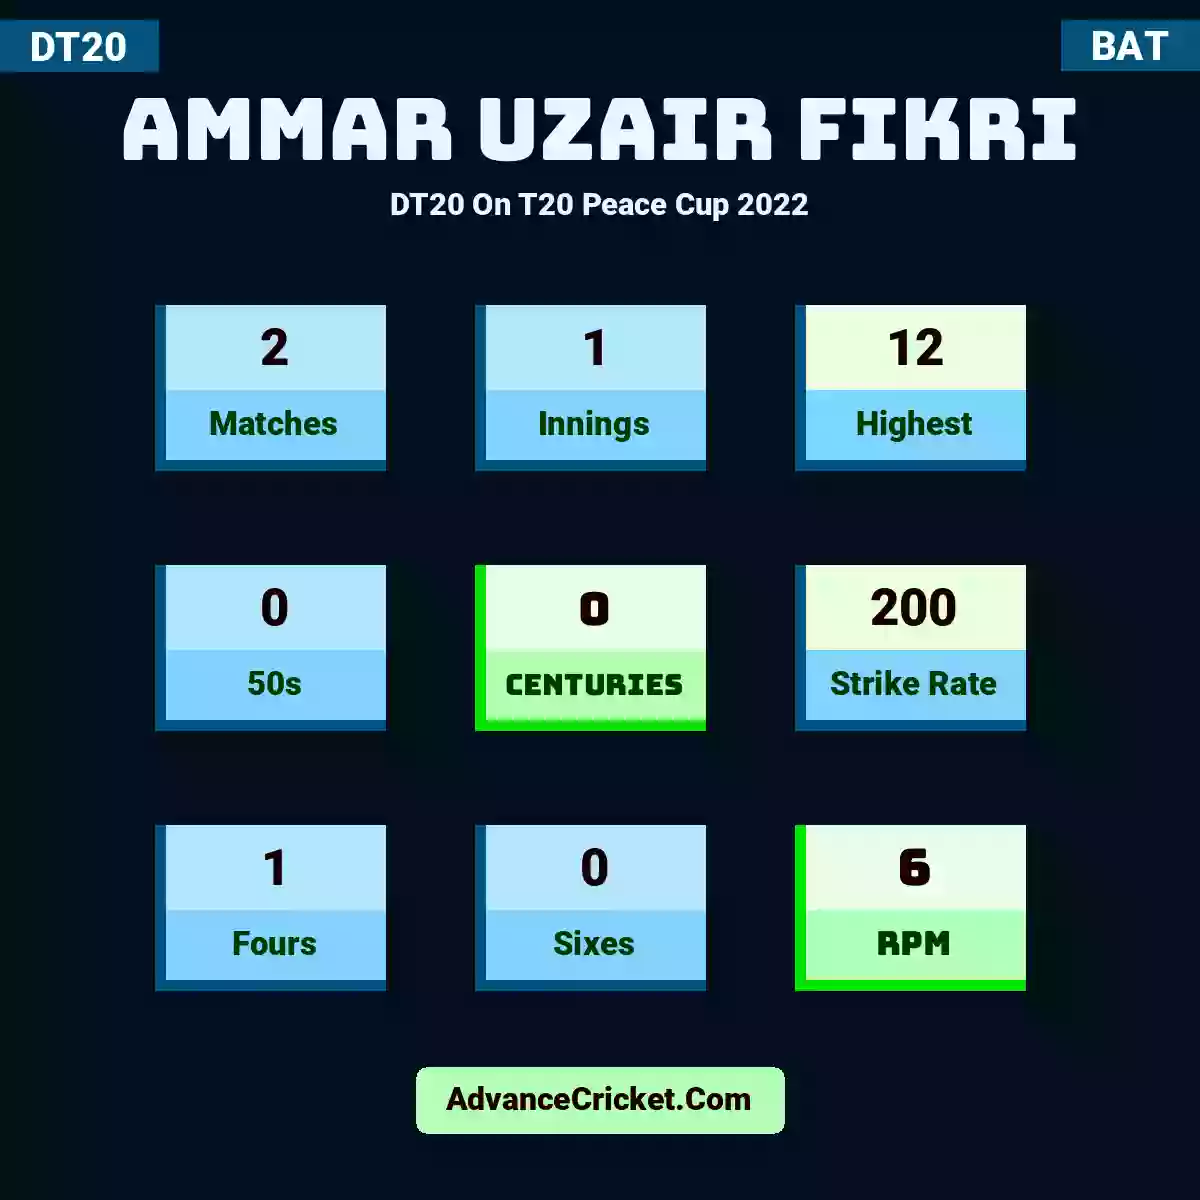 Ammar Uzair Fikri DT20  On T20 Peace Cup 2022, Ammar Uzair Fikri played 2 matches, scored 12 runs as highest, 0 half-centuries, and 0 centuries, with a strike rate of 200. A.Uzair.Fikri hit 1 fours and 0 sixes, with an RPM of 6.